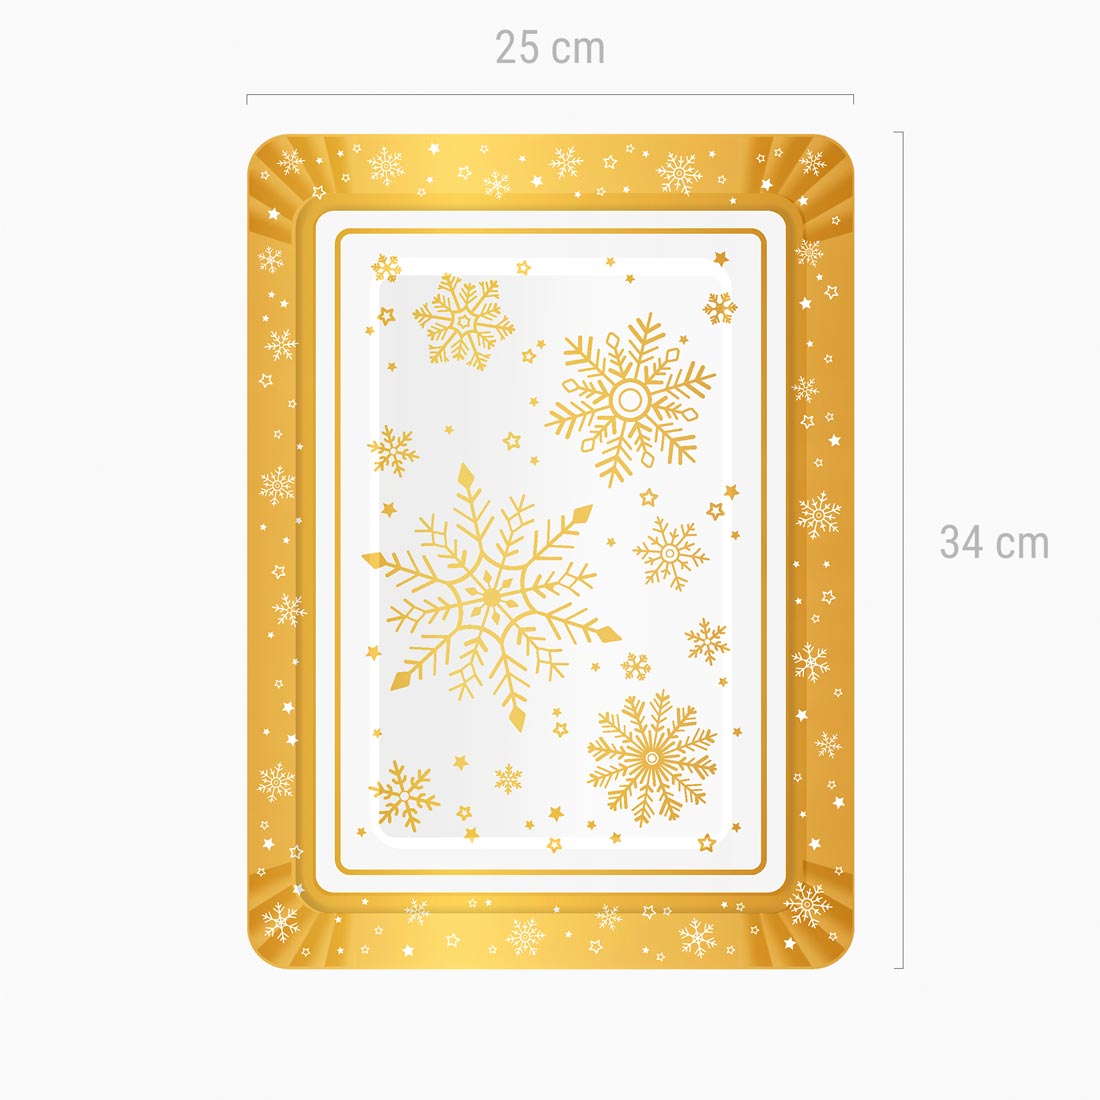 Christmas rectangular tray gold and white snowflake